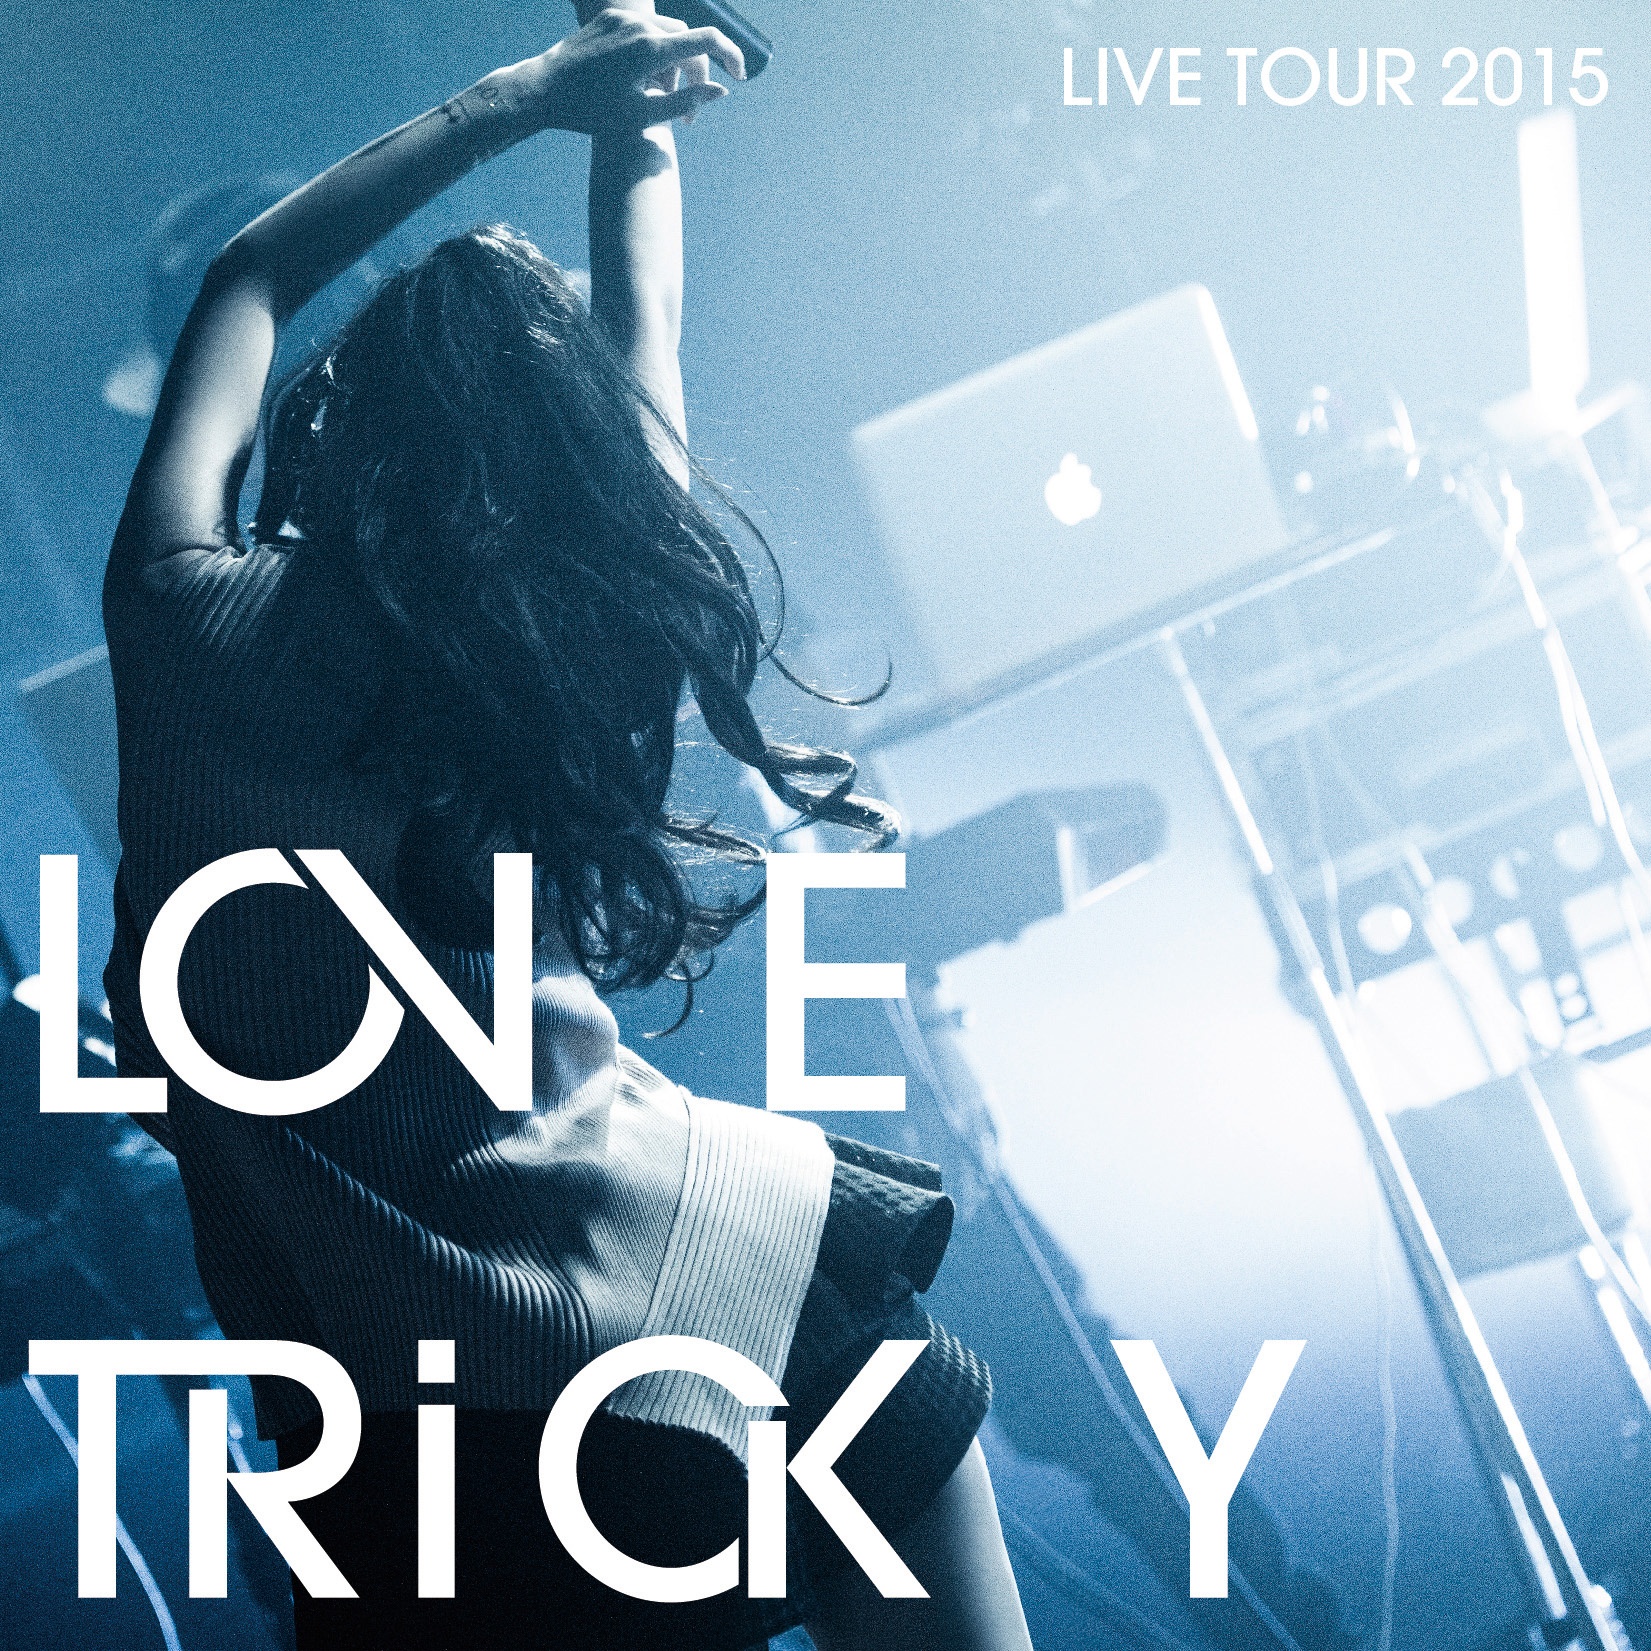 shooting star LOVE TRiCKY LIVE TOUR 2015 ti zhong jian